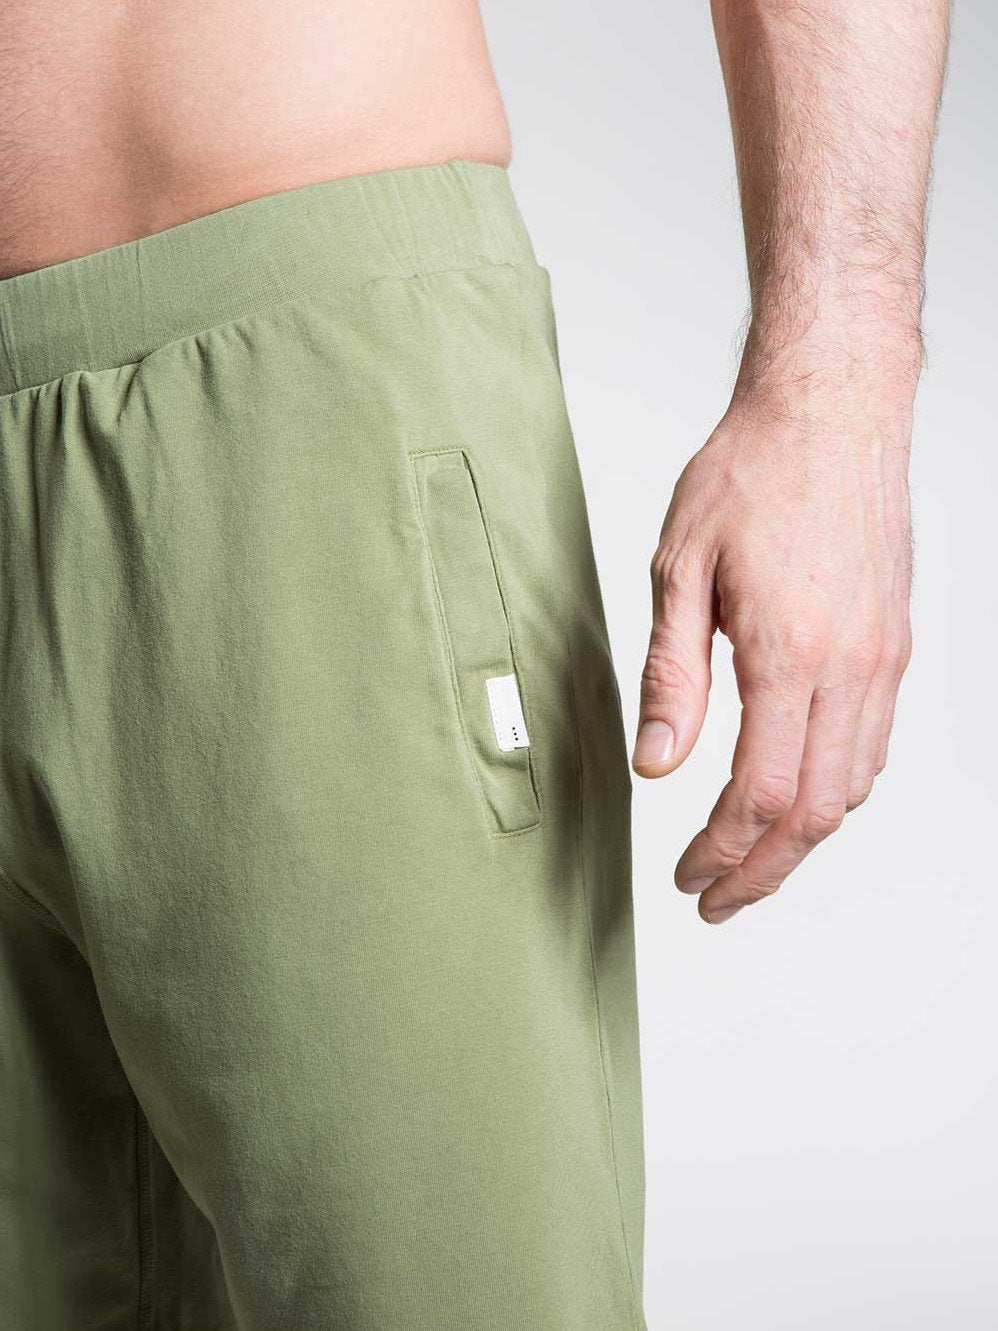 Men's Yoga Shorts Long Shorts Eco Friendly Jersey Organic Clothing 